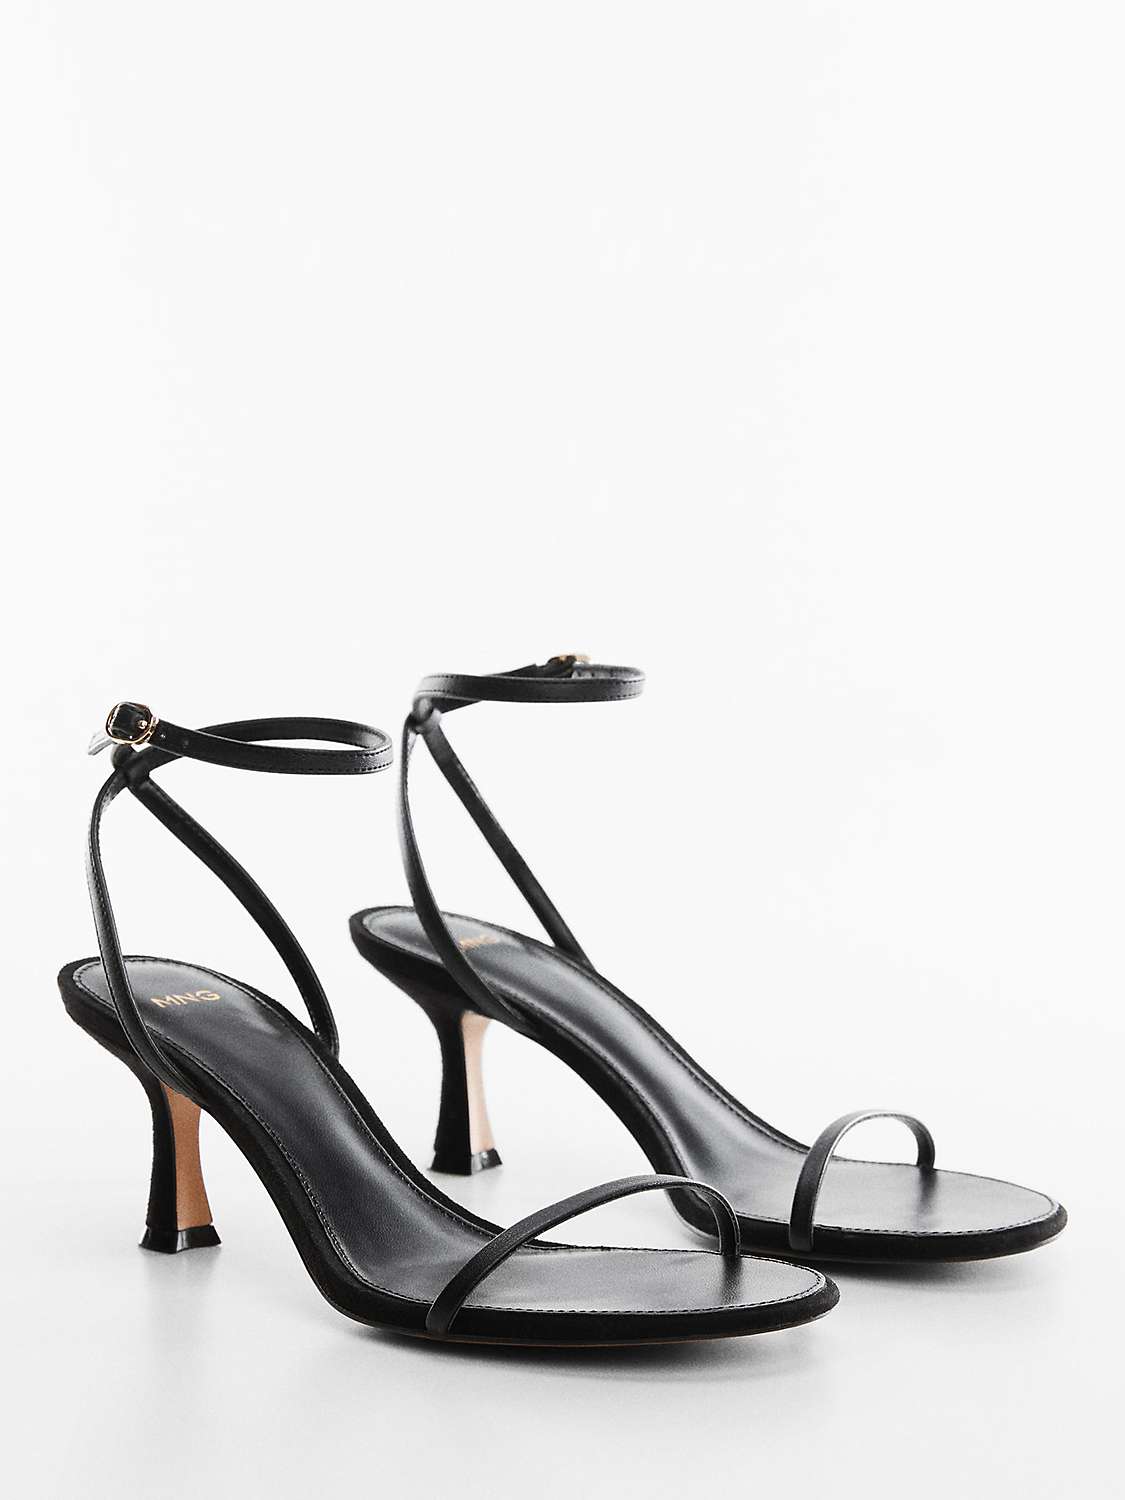 Mango Flo Kitten Heel Sandals, Black at John Lewis & Partners